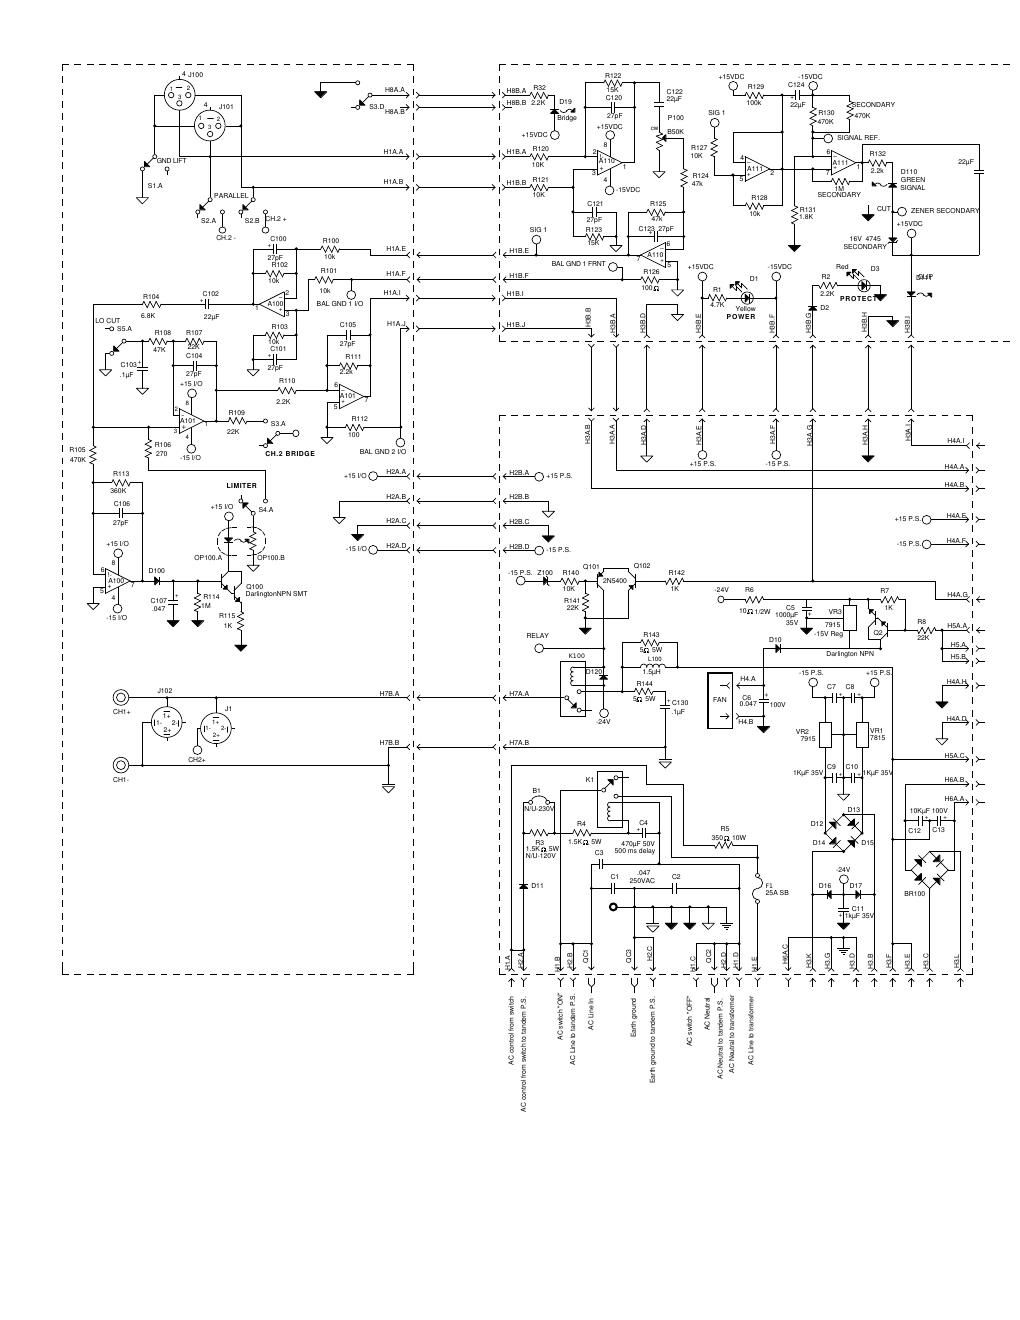 carvin dcm 4000 2000 power amp rev c schematic